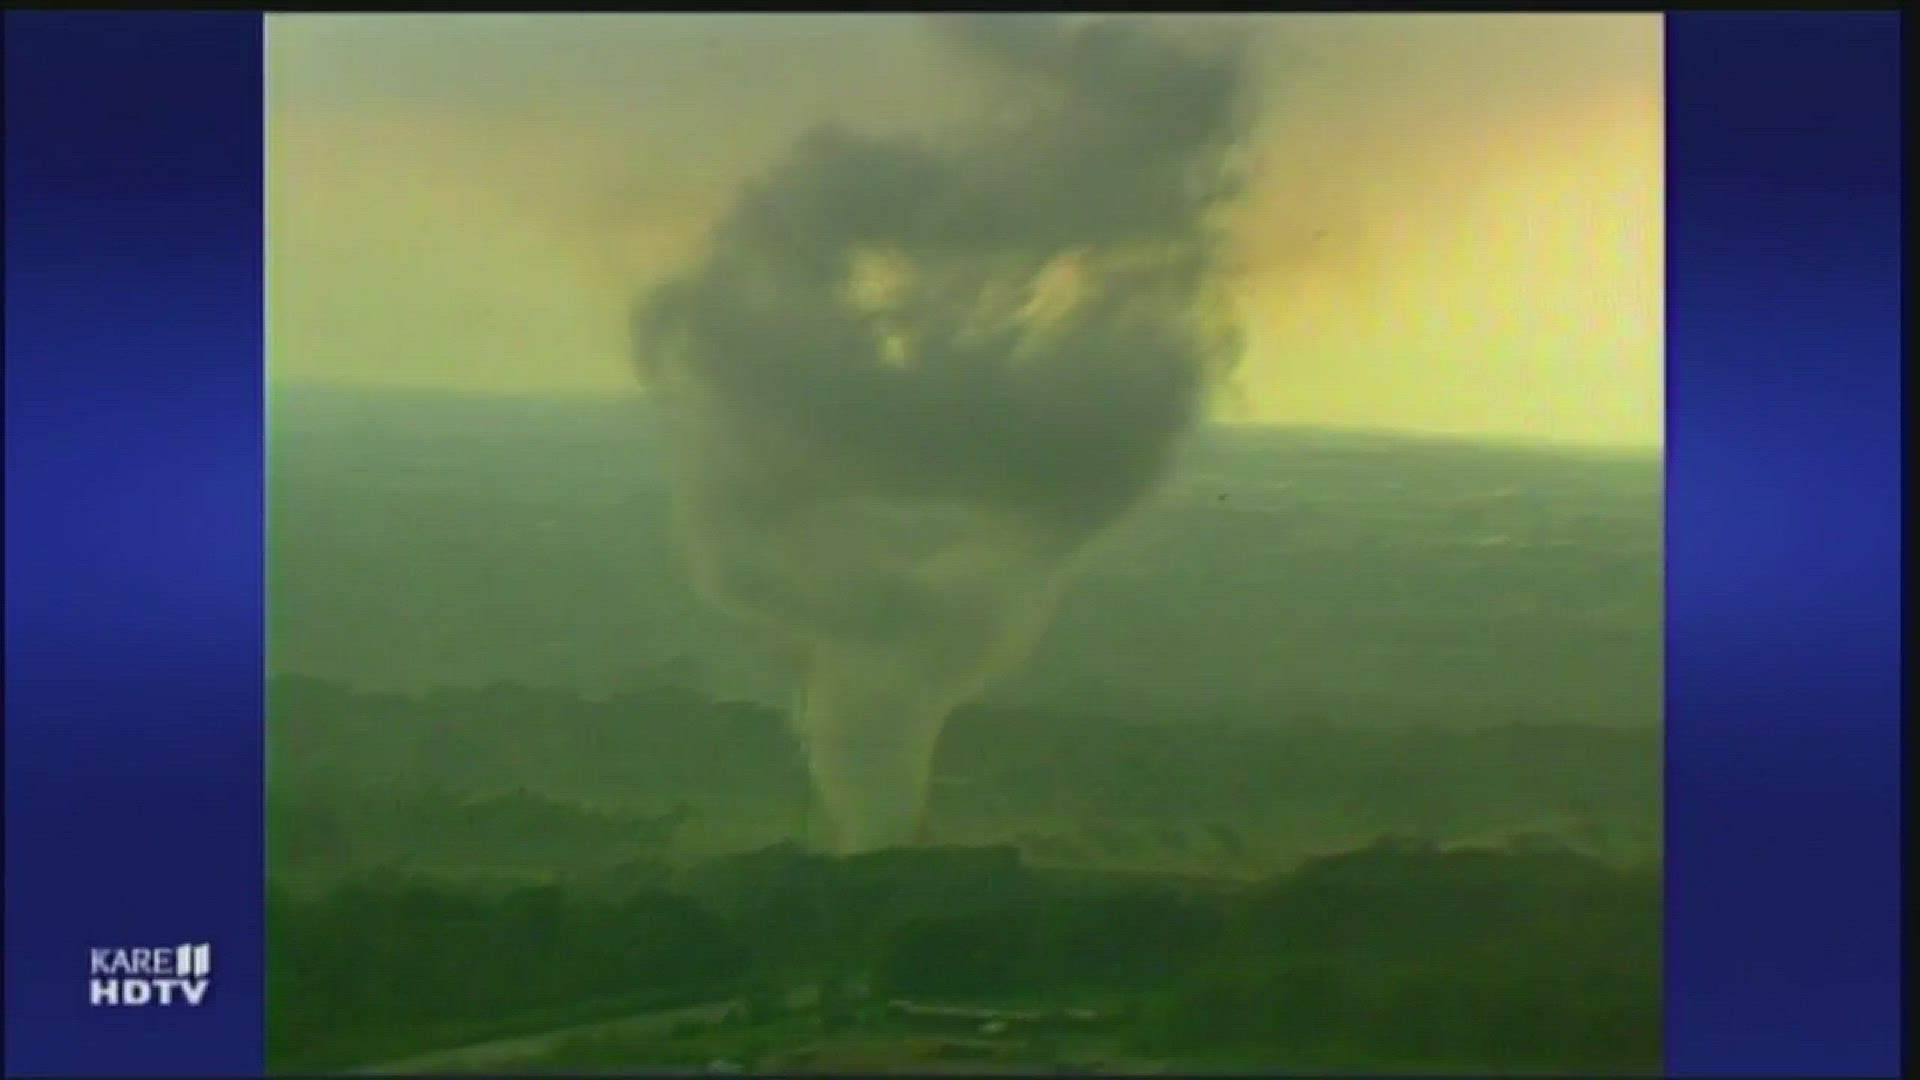 30 years ago: Sky 11 captures tornado footage